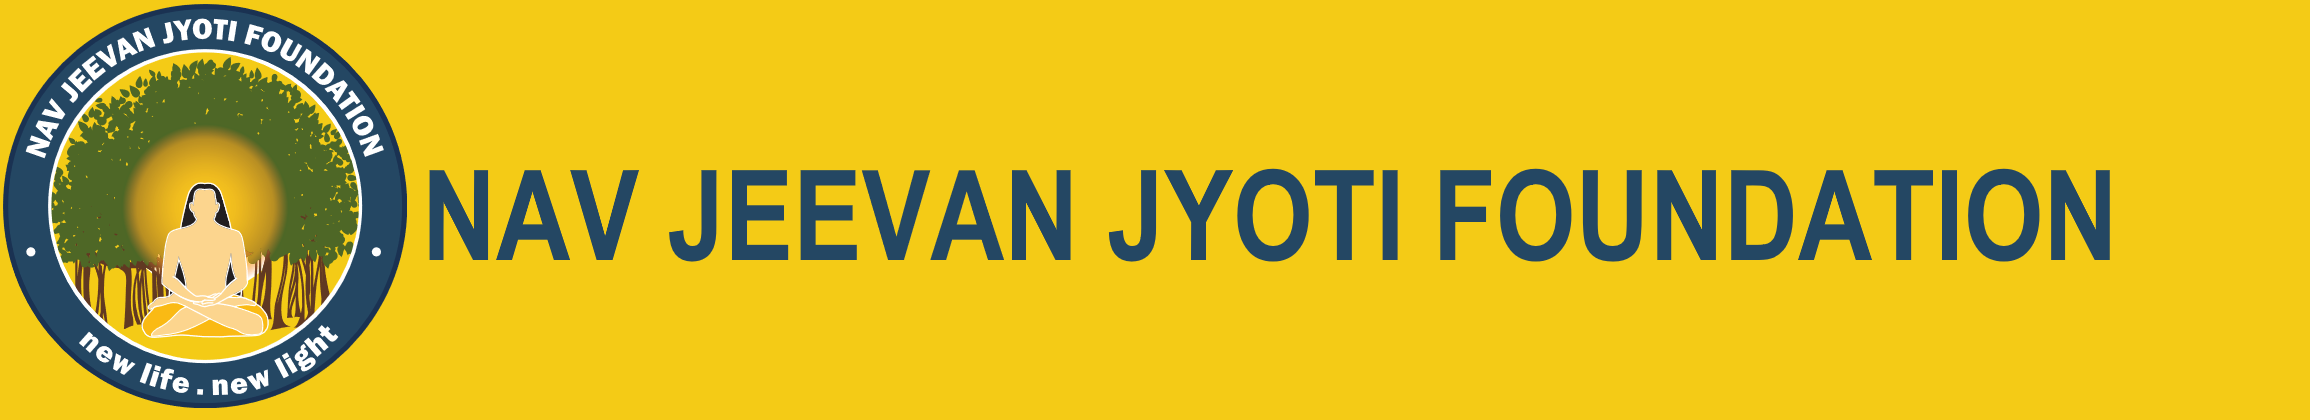 Nav Jeevan Jyoti Foundation